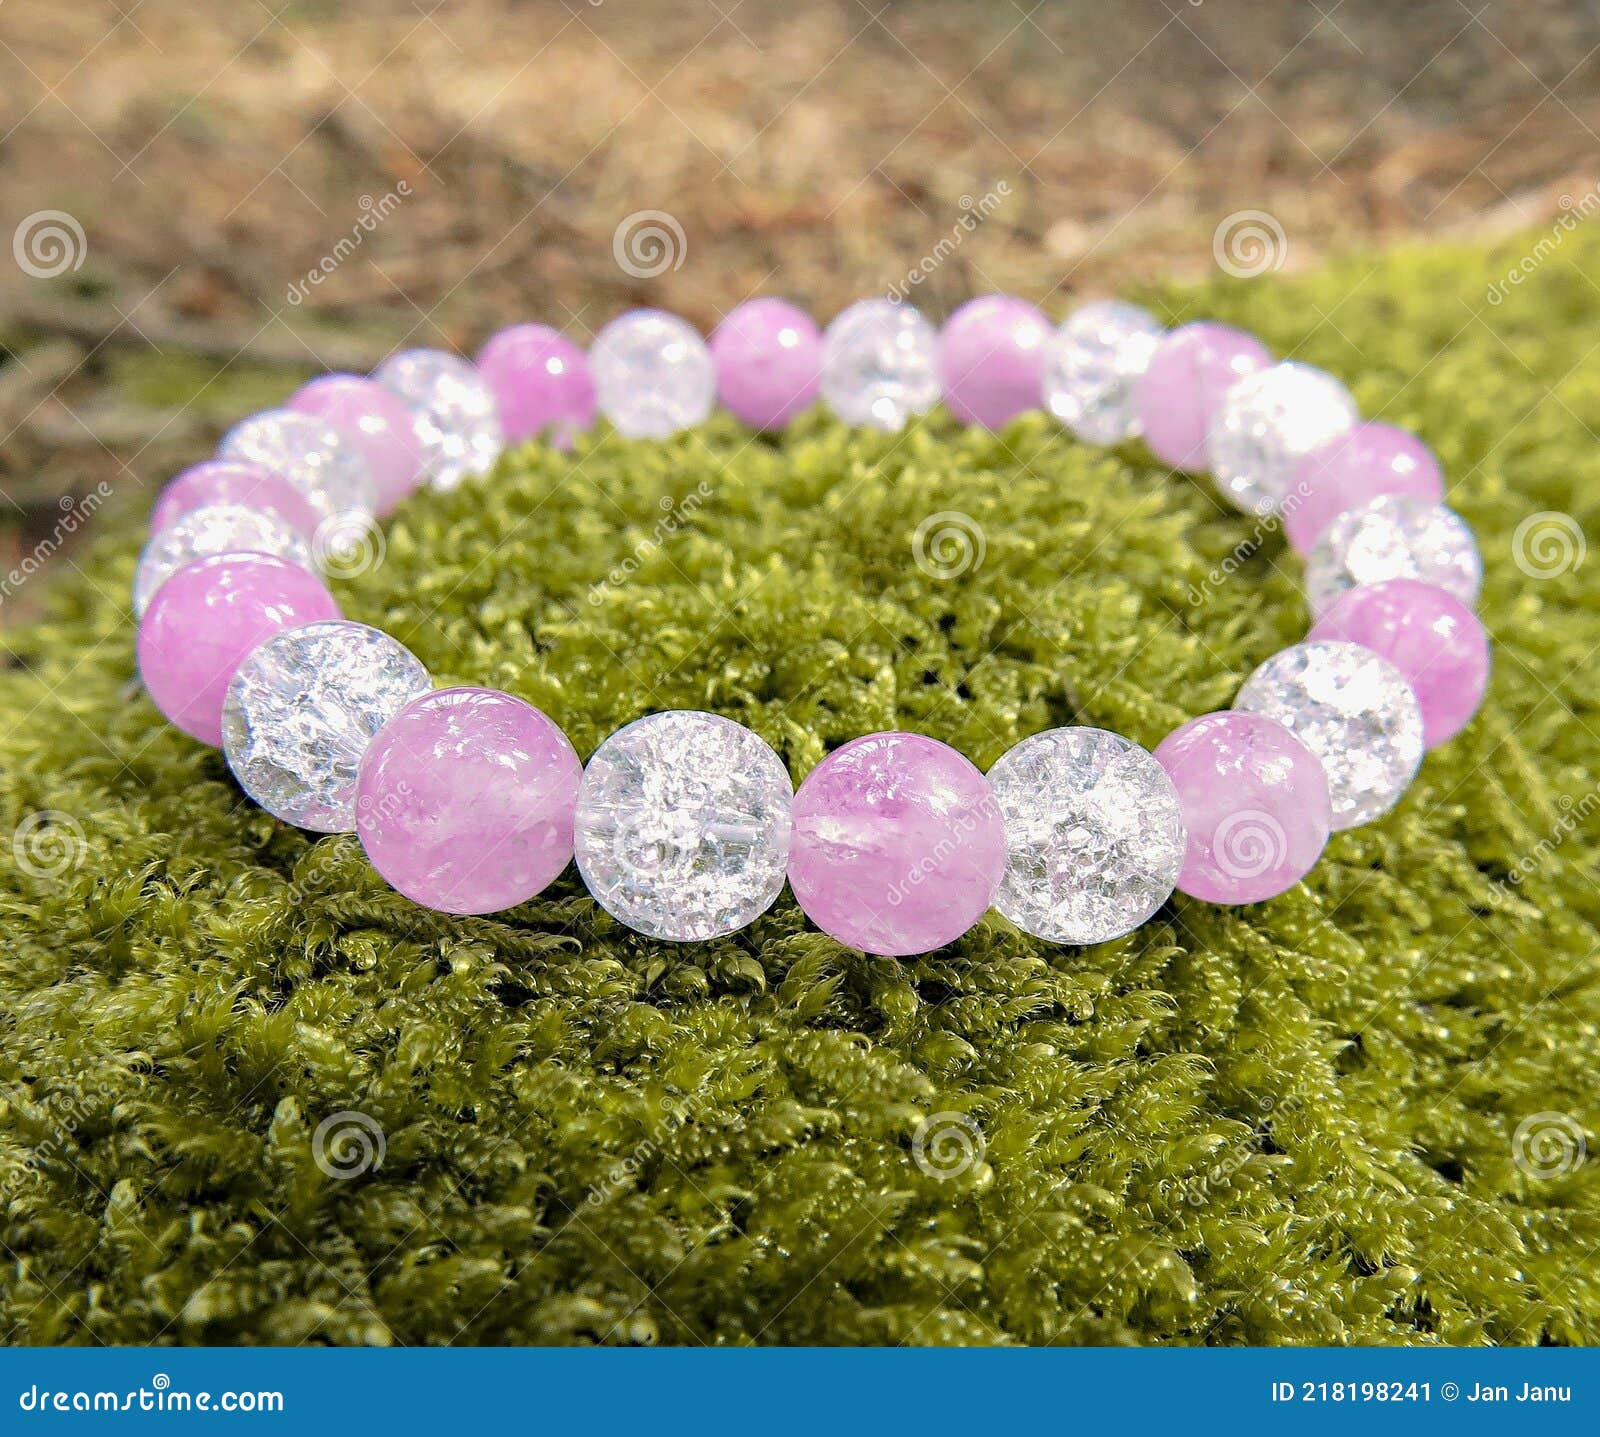 Fertility and conception support crystal bracelet Rose Quartz Pink opal  and Cracked quartz